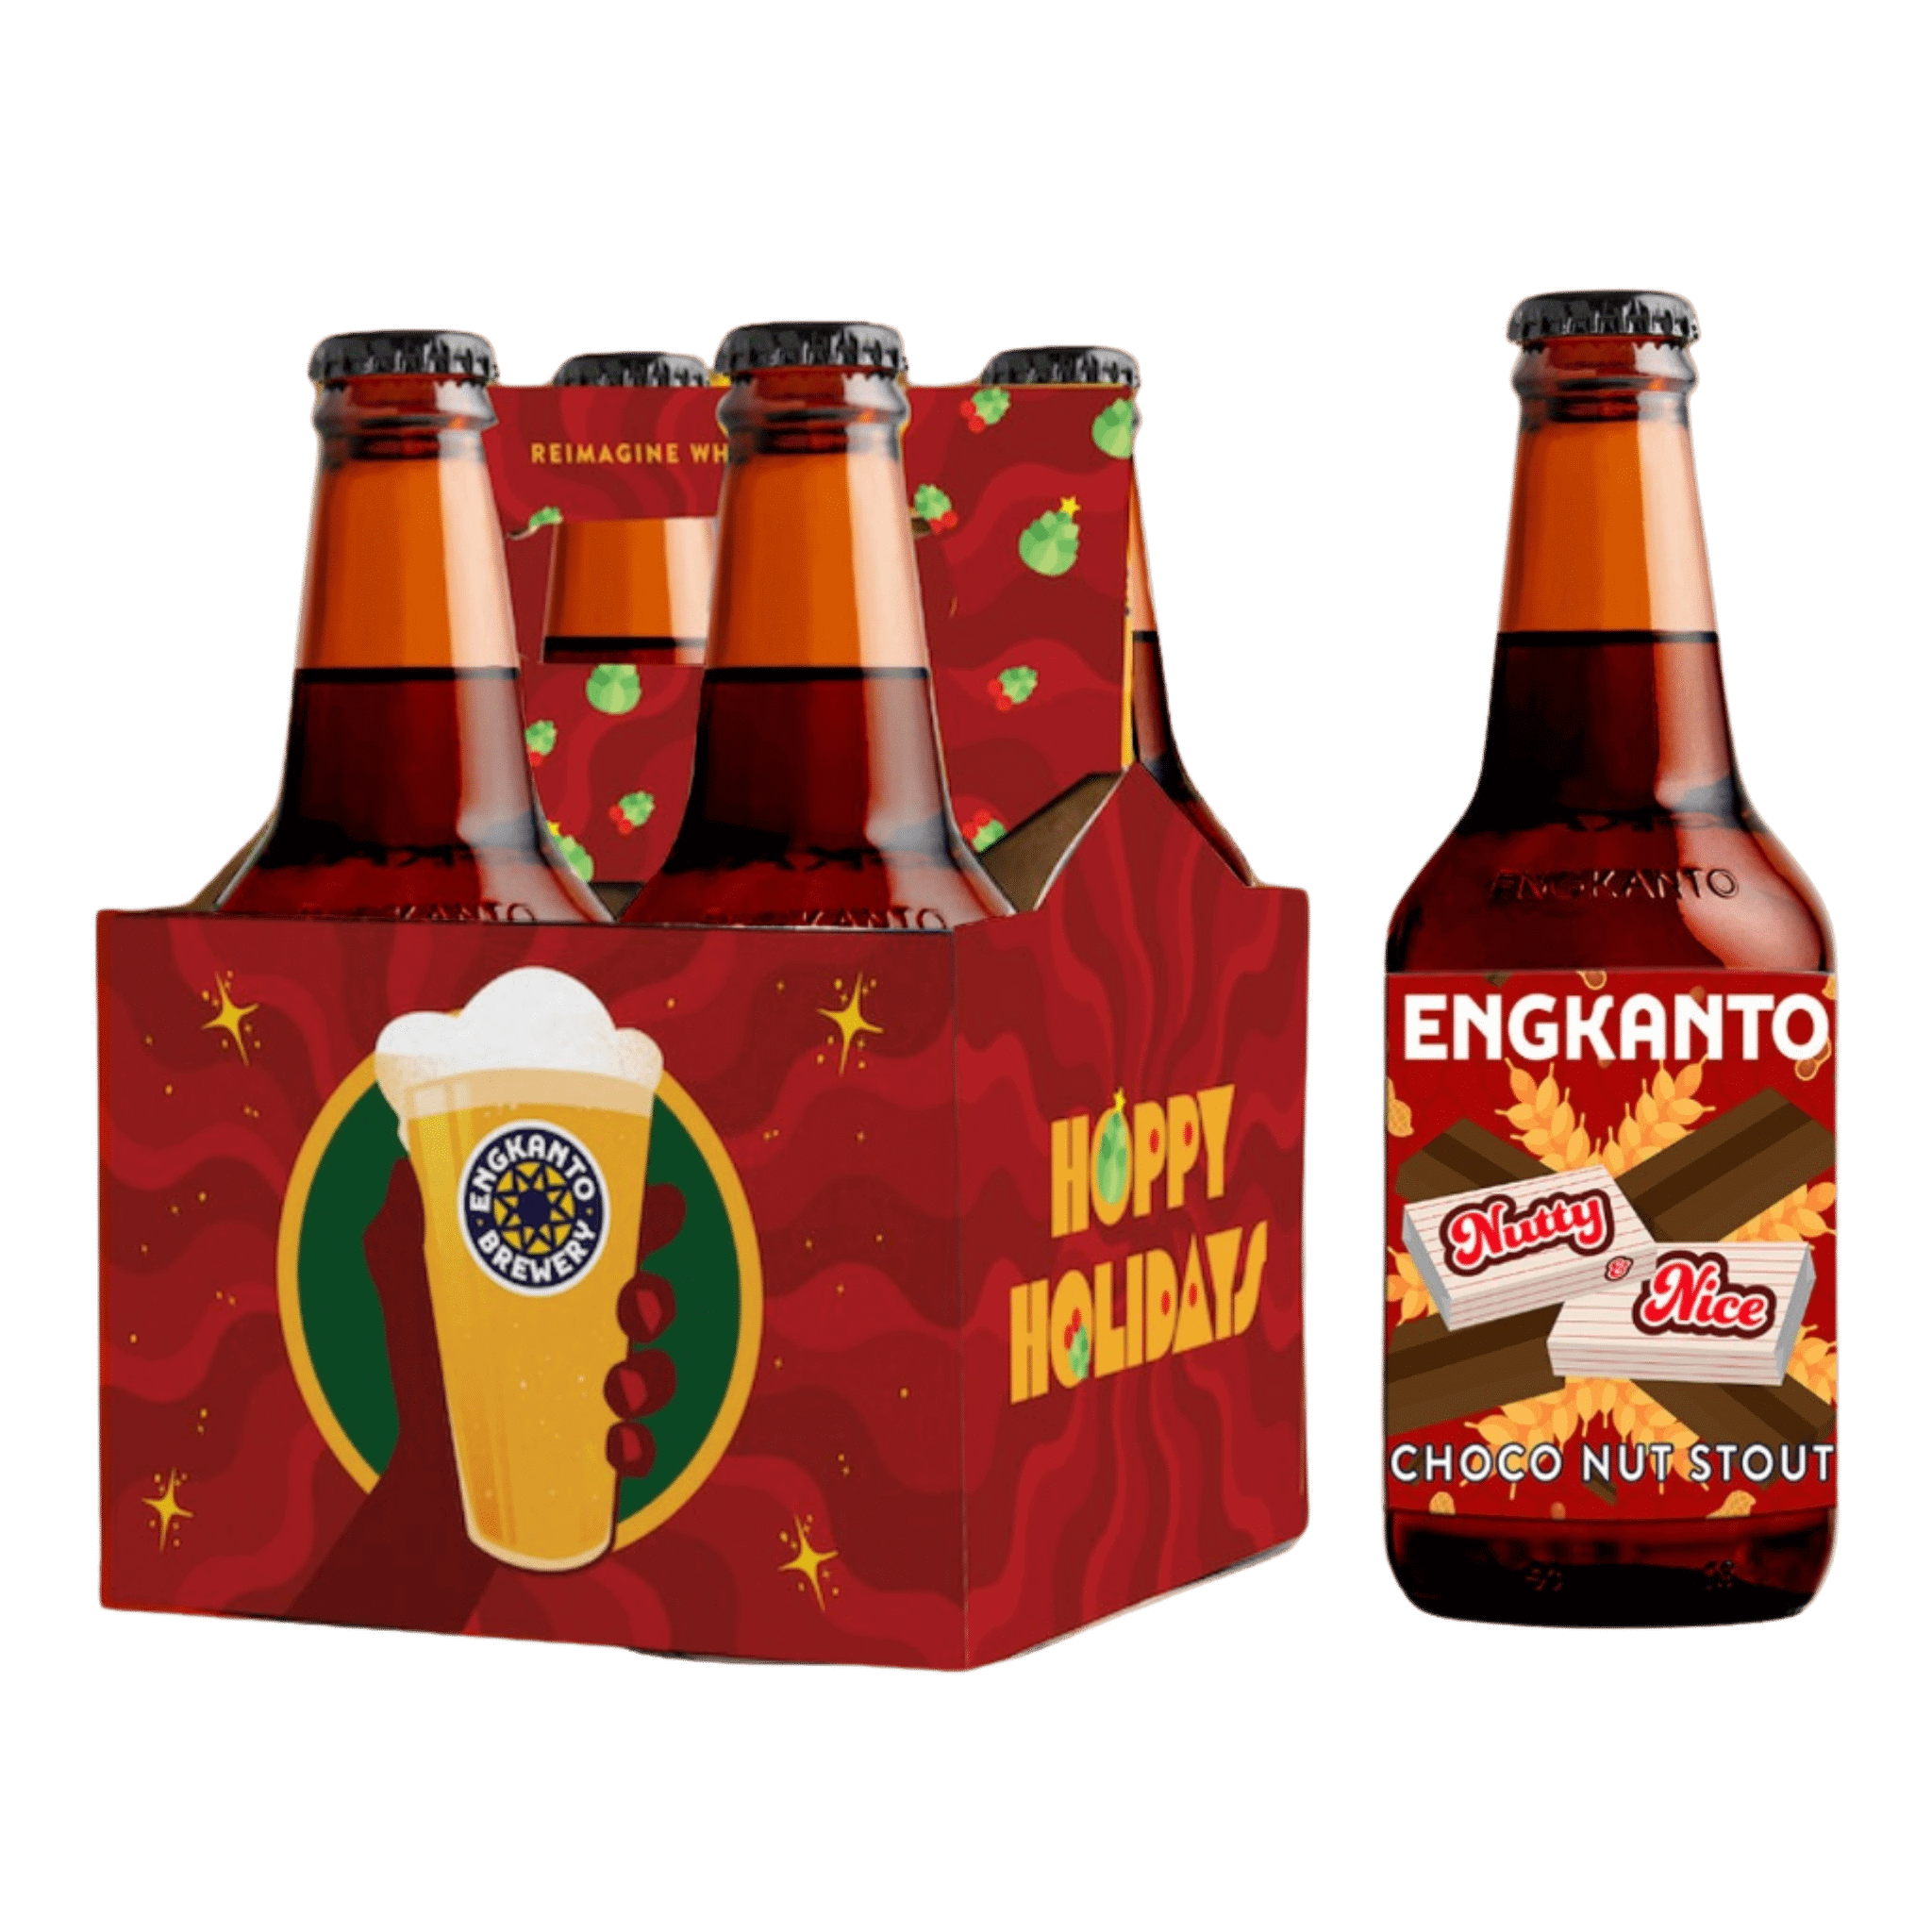 Engkanto Nutty & Nice Choco Nut Stout 330ml Bottle 4-Pack